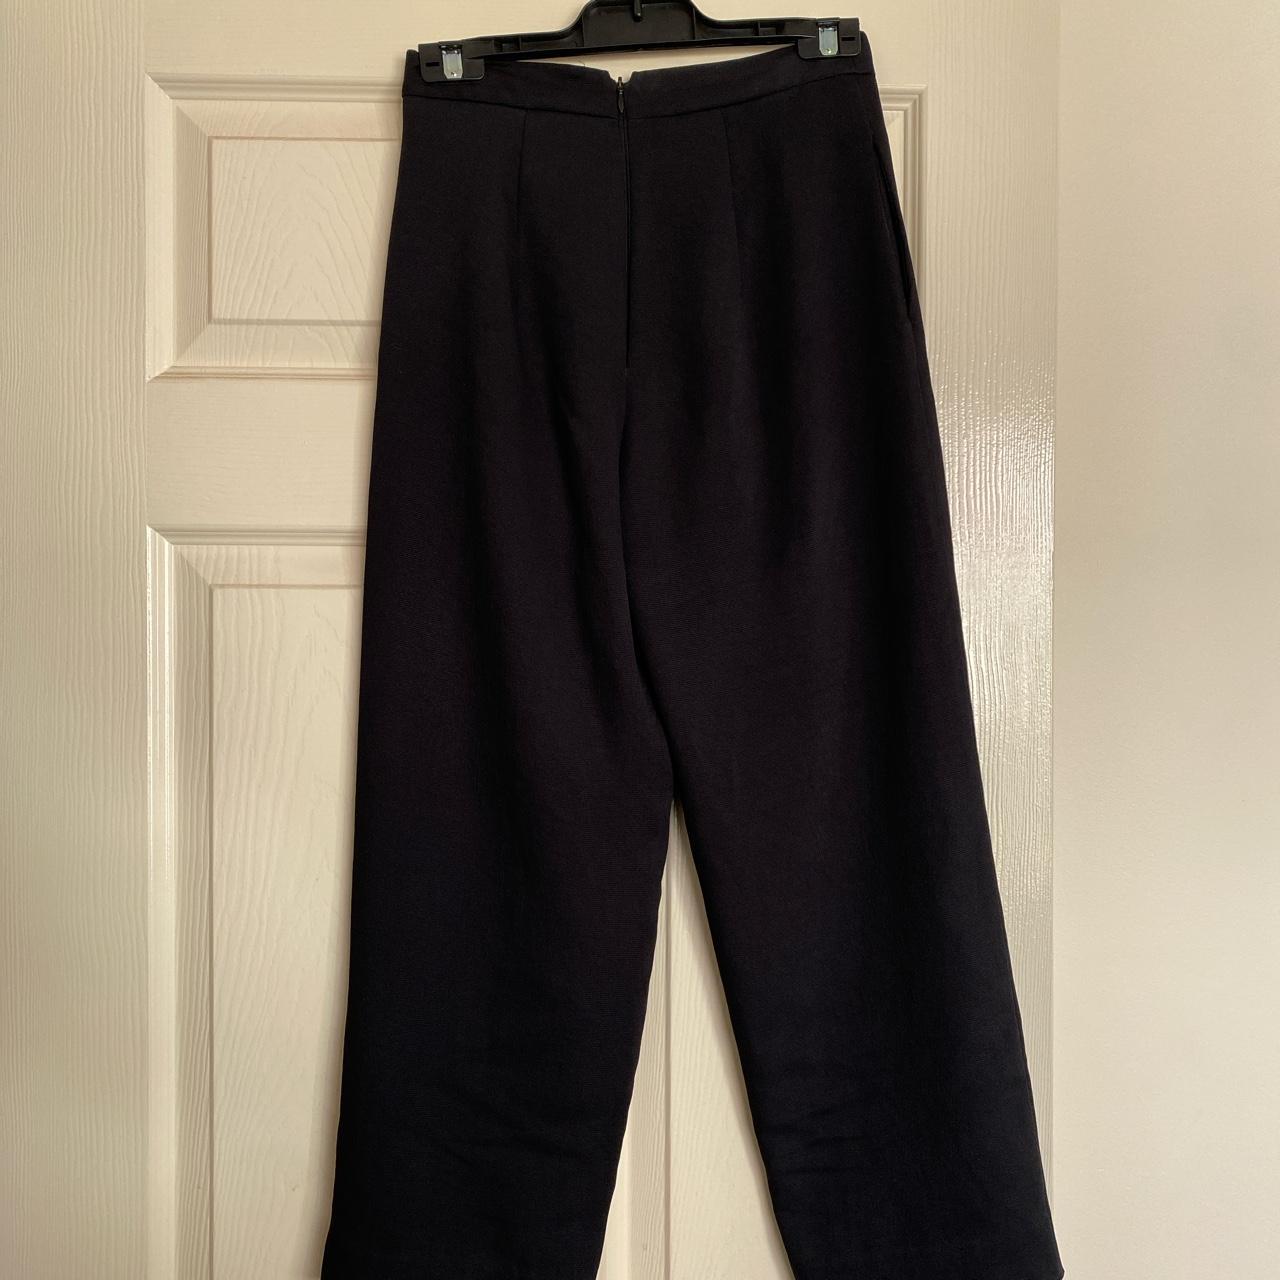 Kookai Oyster Pants - size 34 (AUS 6) 8/10... - Depop